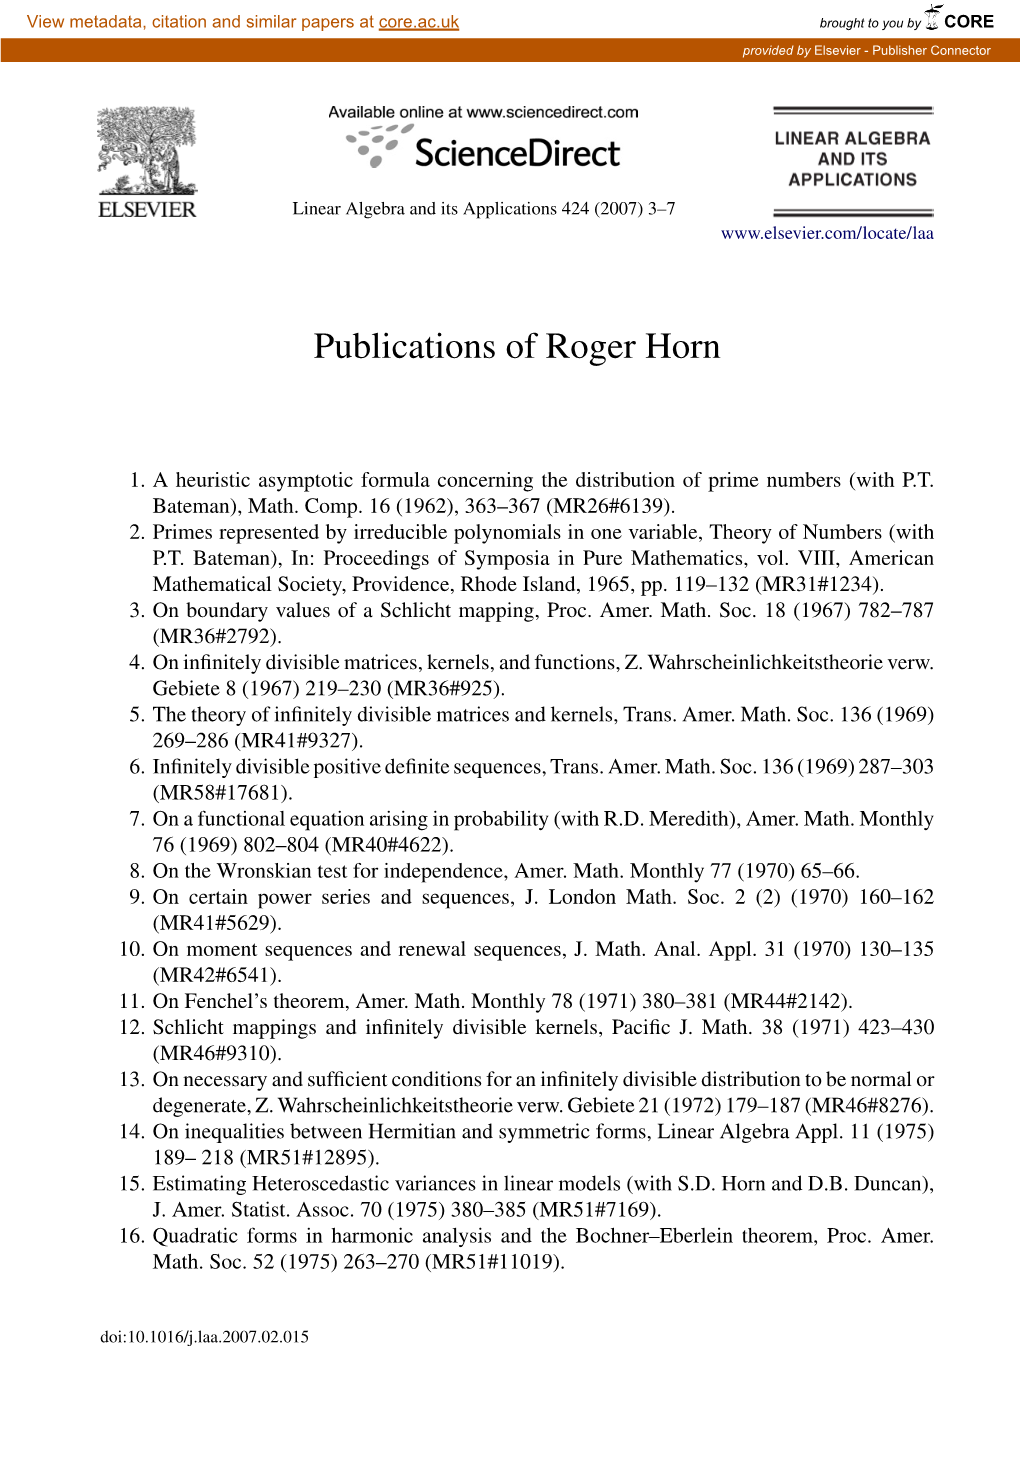 Publications of Roger Horn